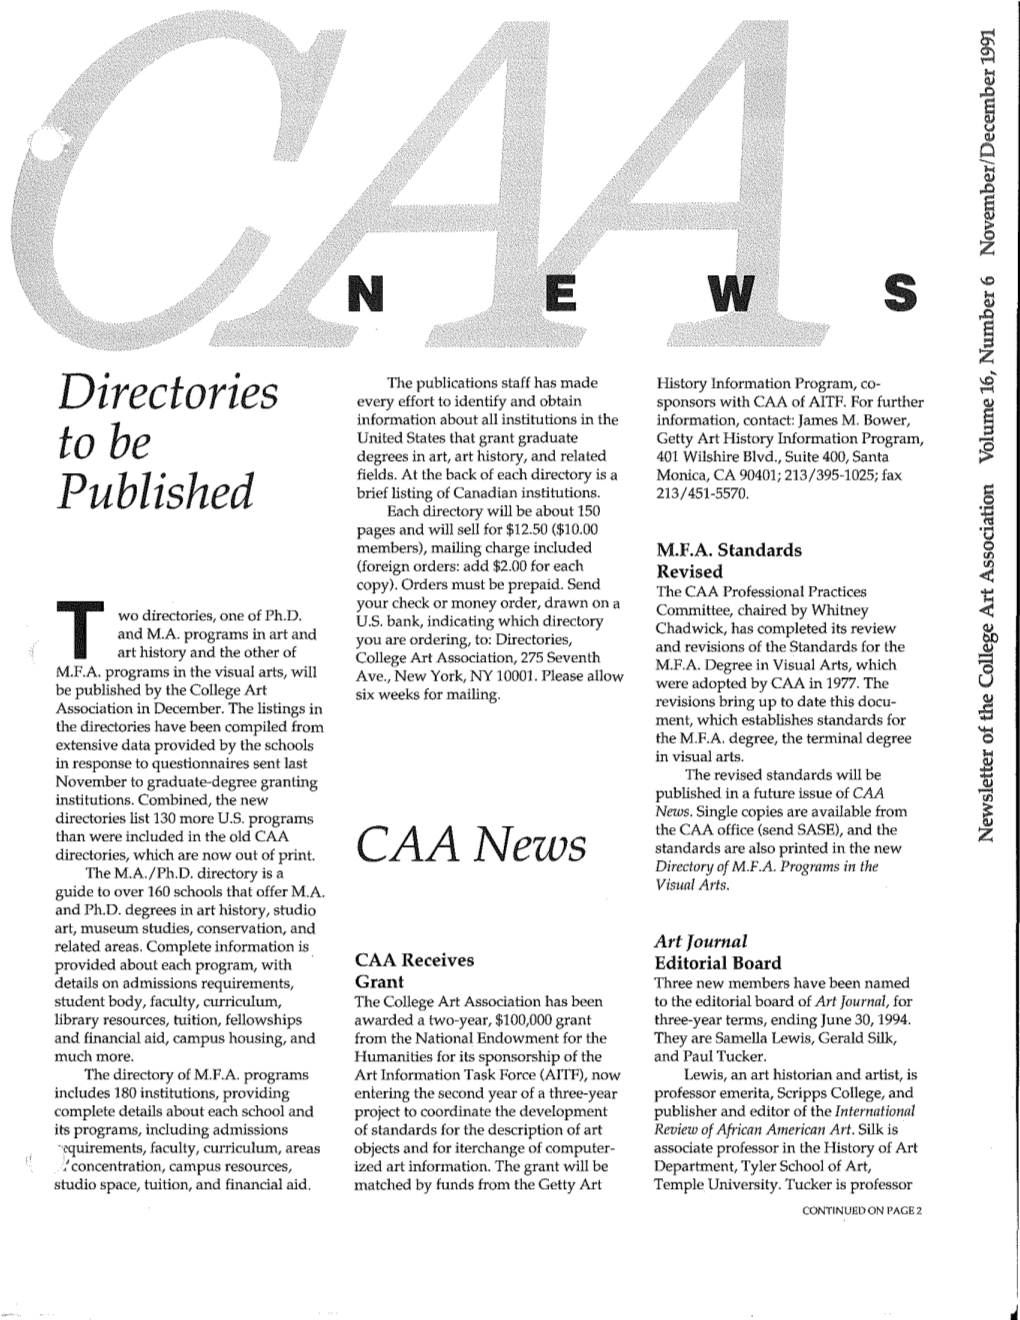 November-December 1991 CAA News